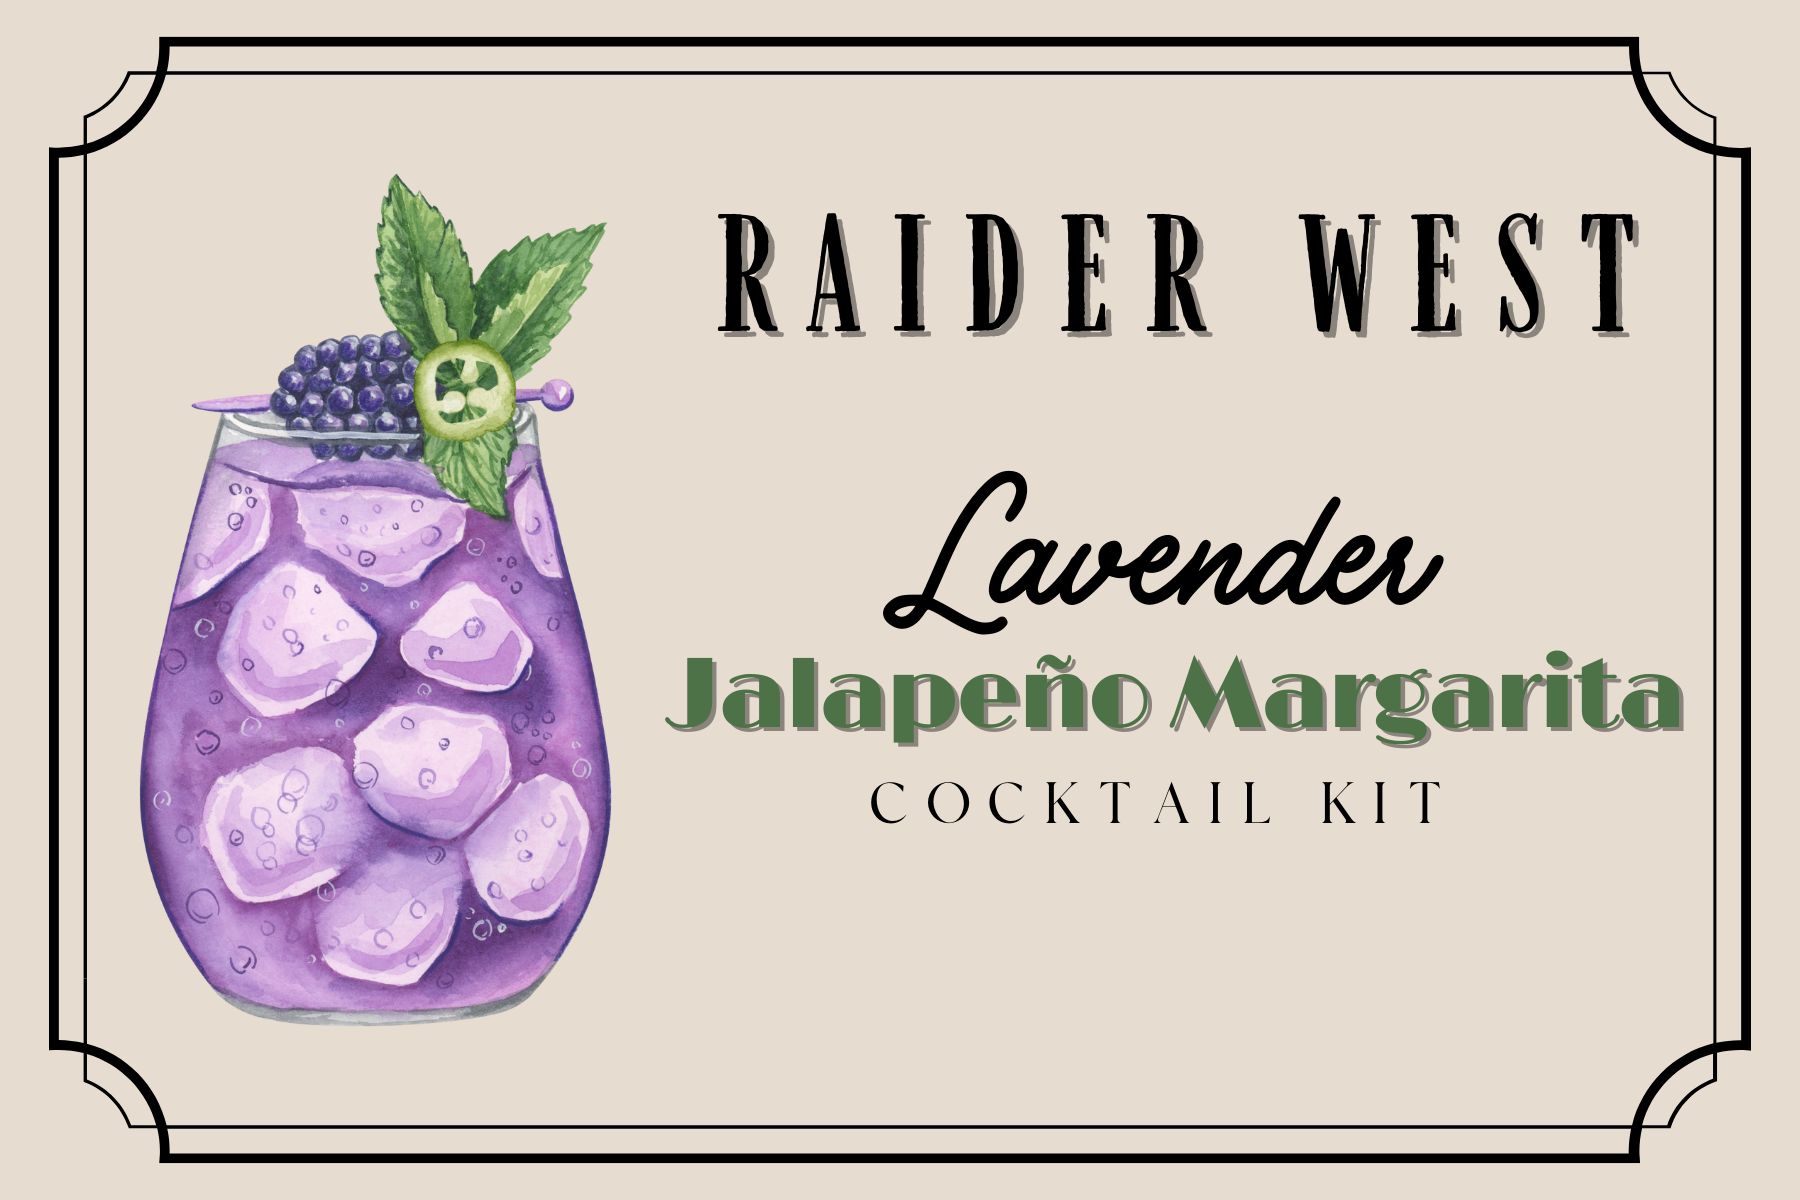 Lavender jalapeno margarita, raider west farms, lavender margarita, lubbock, tx, LBK, lavender farm, cocktails, cocktail syrups